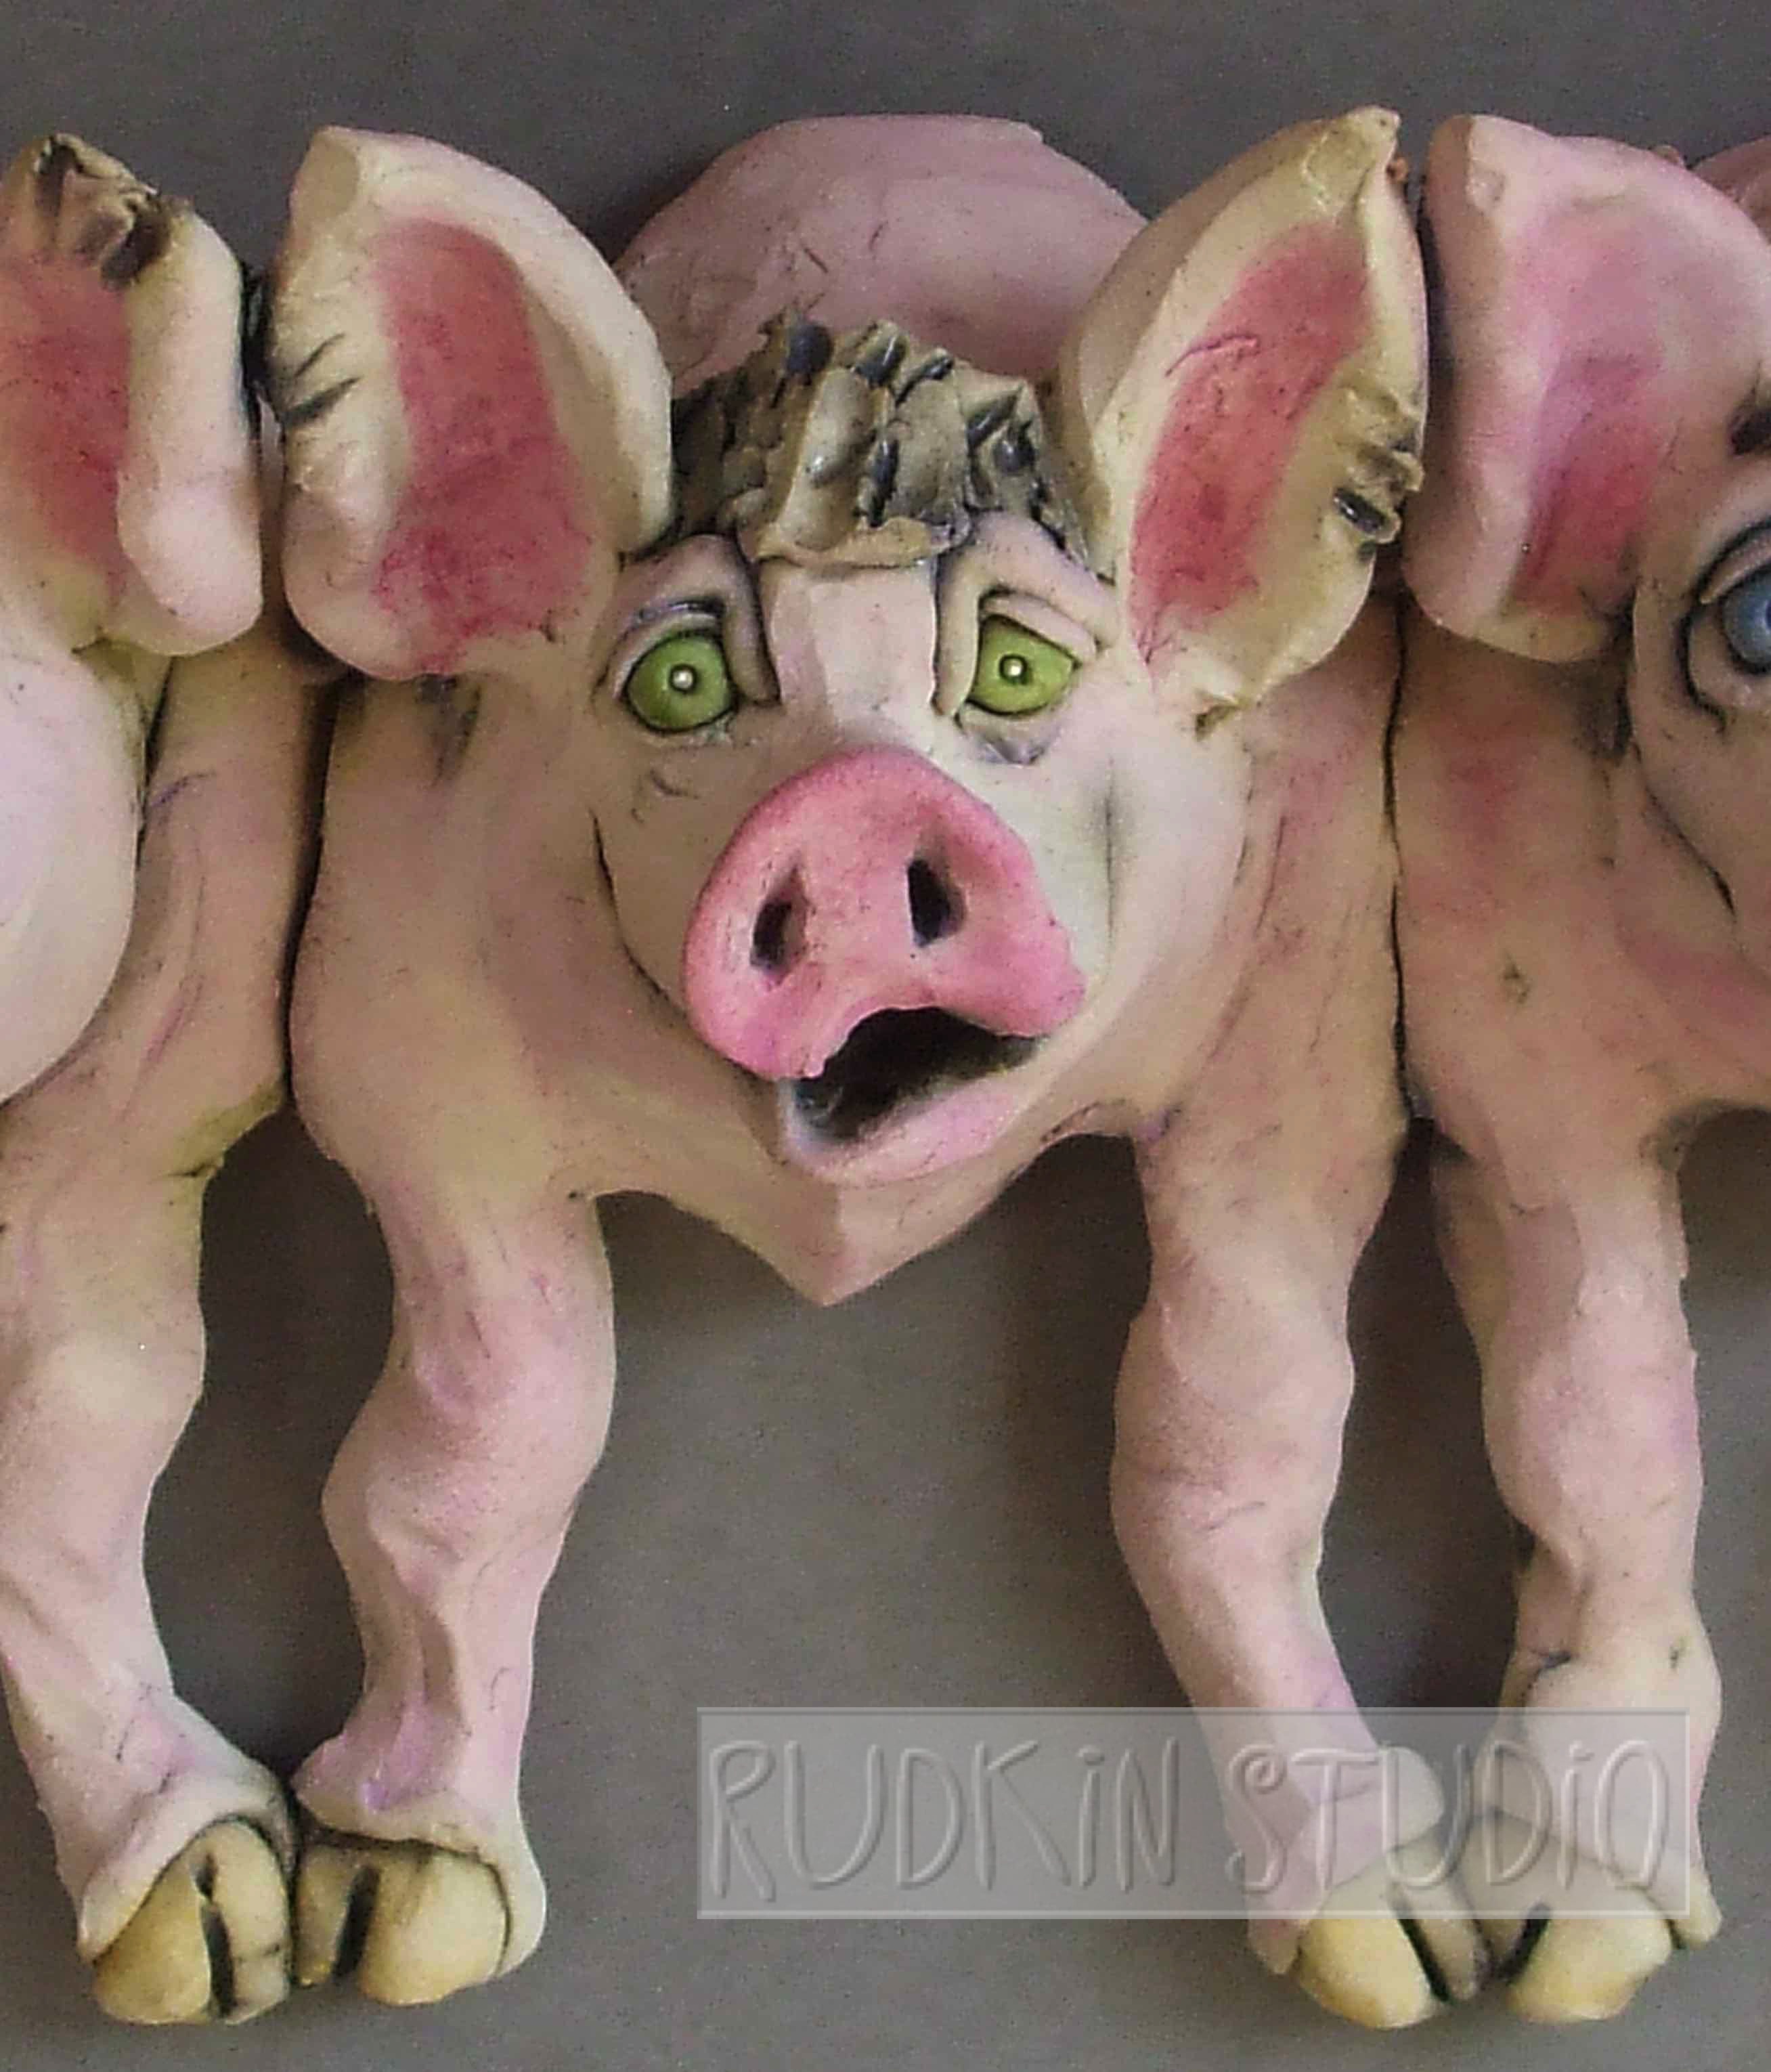 Three Little Pigs Ceramic Wall Sculpture - Rudkin Studio